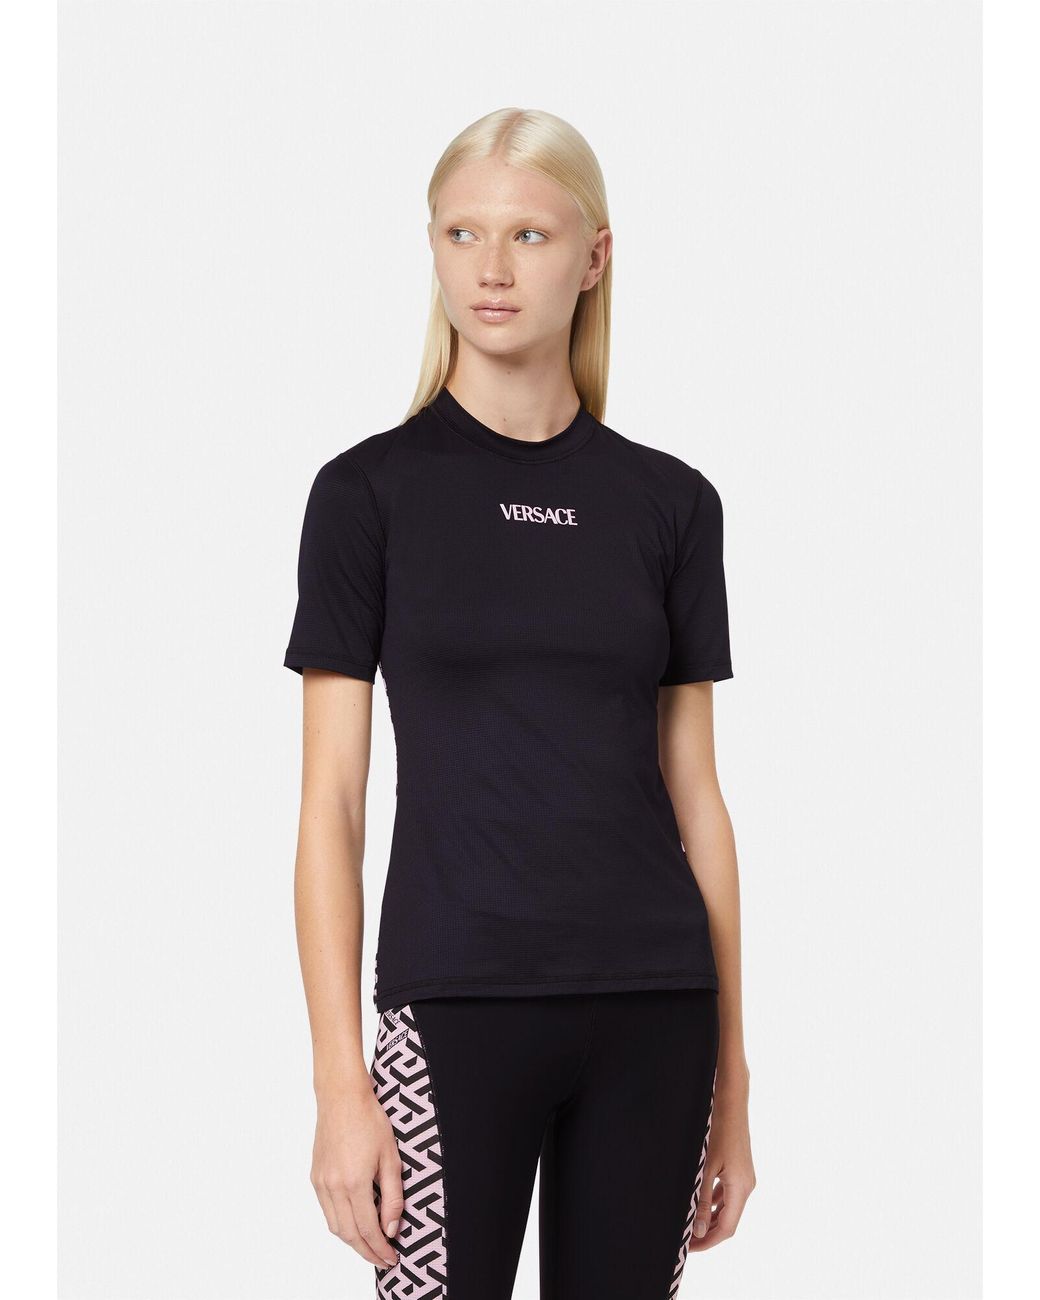 Versace La Greca Gym Shirt in Black | Lyst